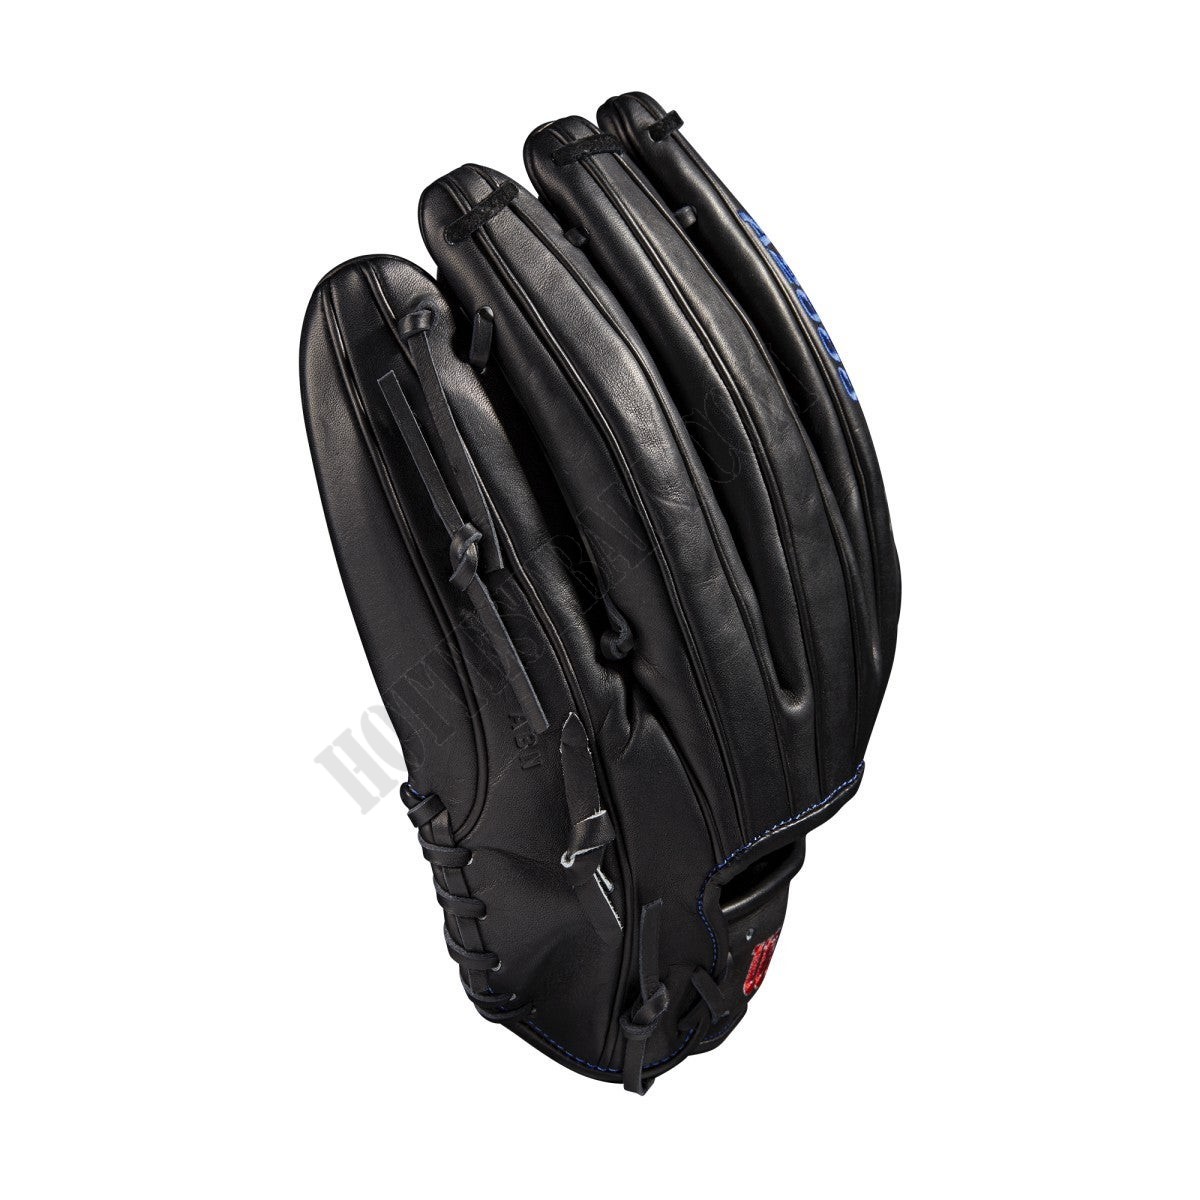 2021 A2000 JL34 GM 12.5" Pitcher's Baseball Glove ● Wilson Promotions - -4